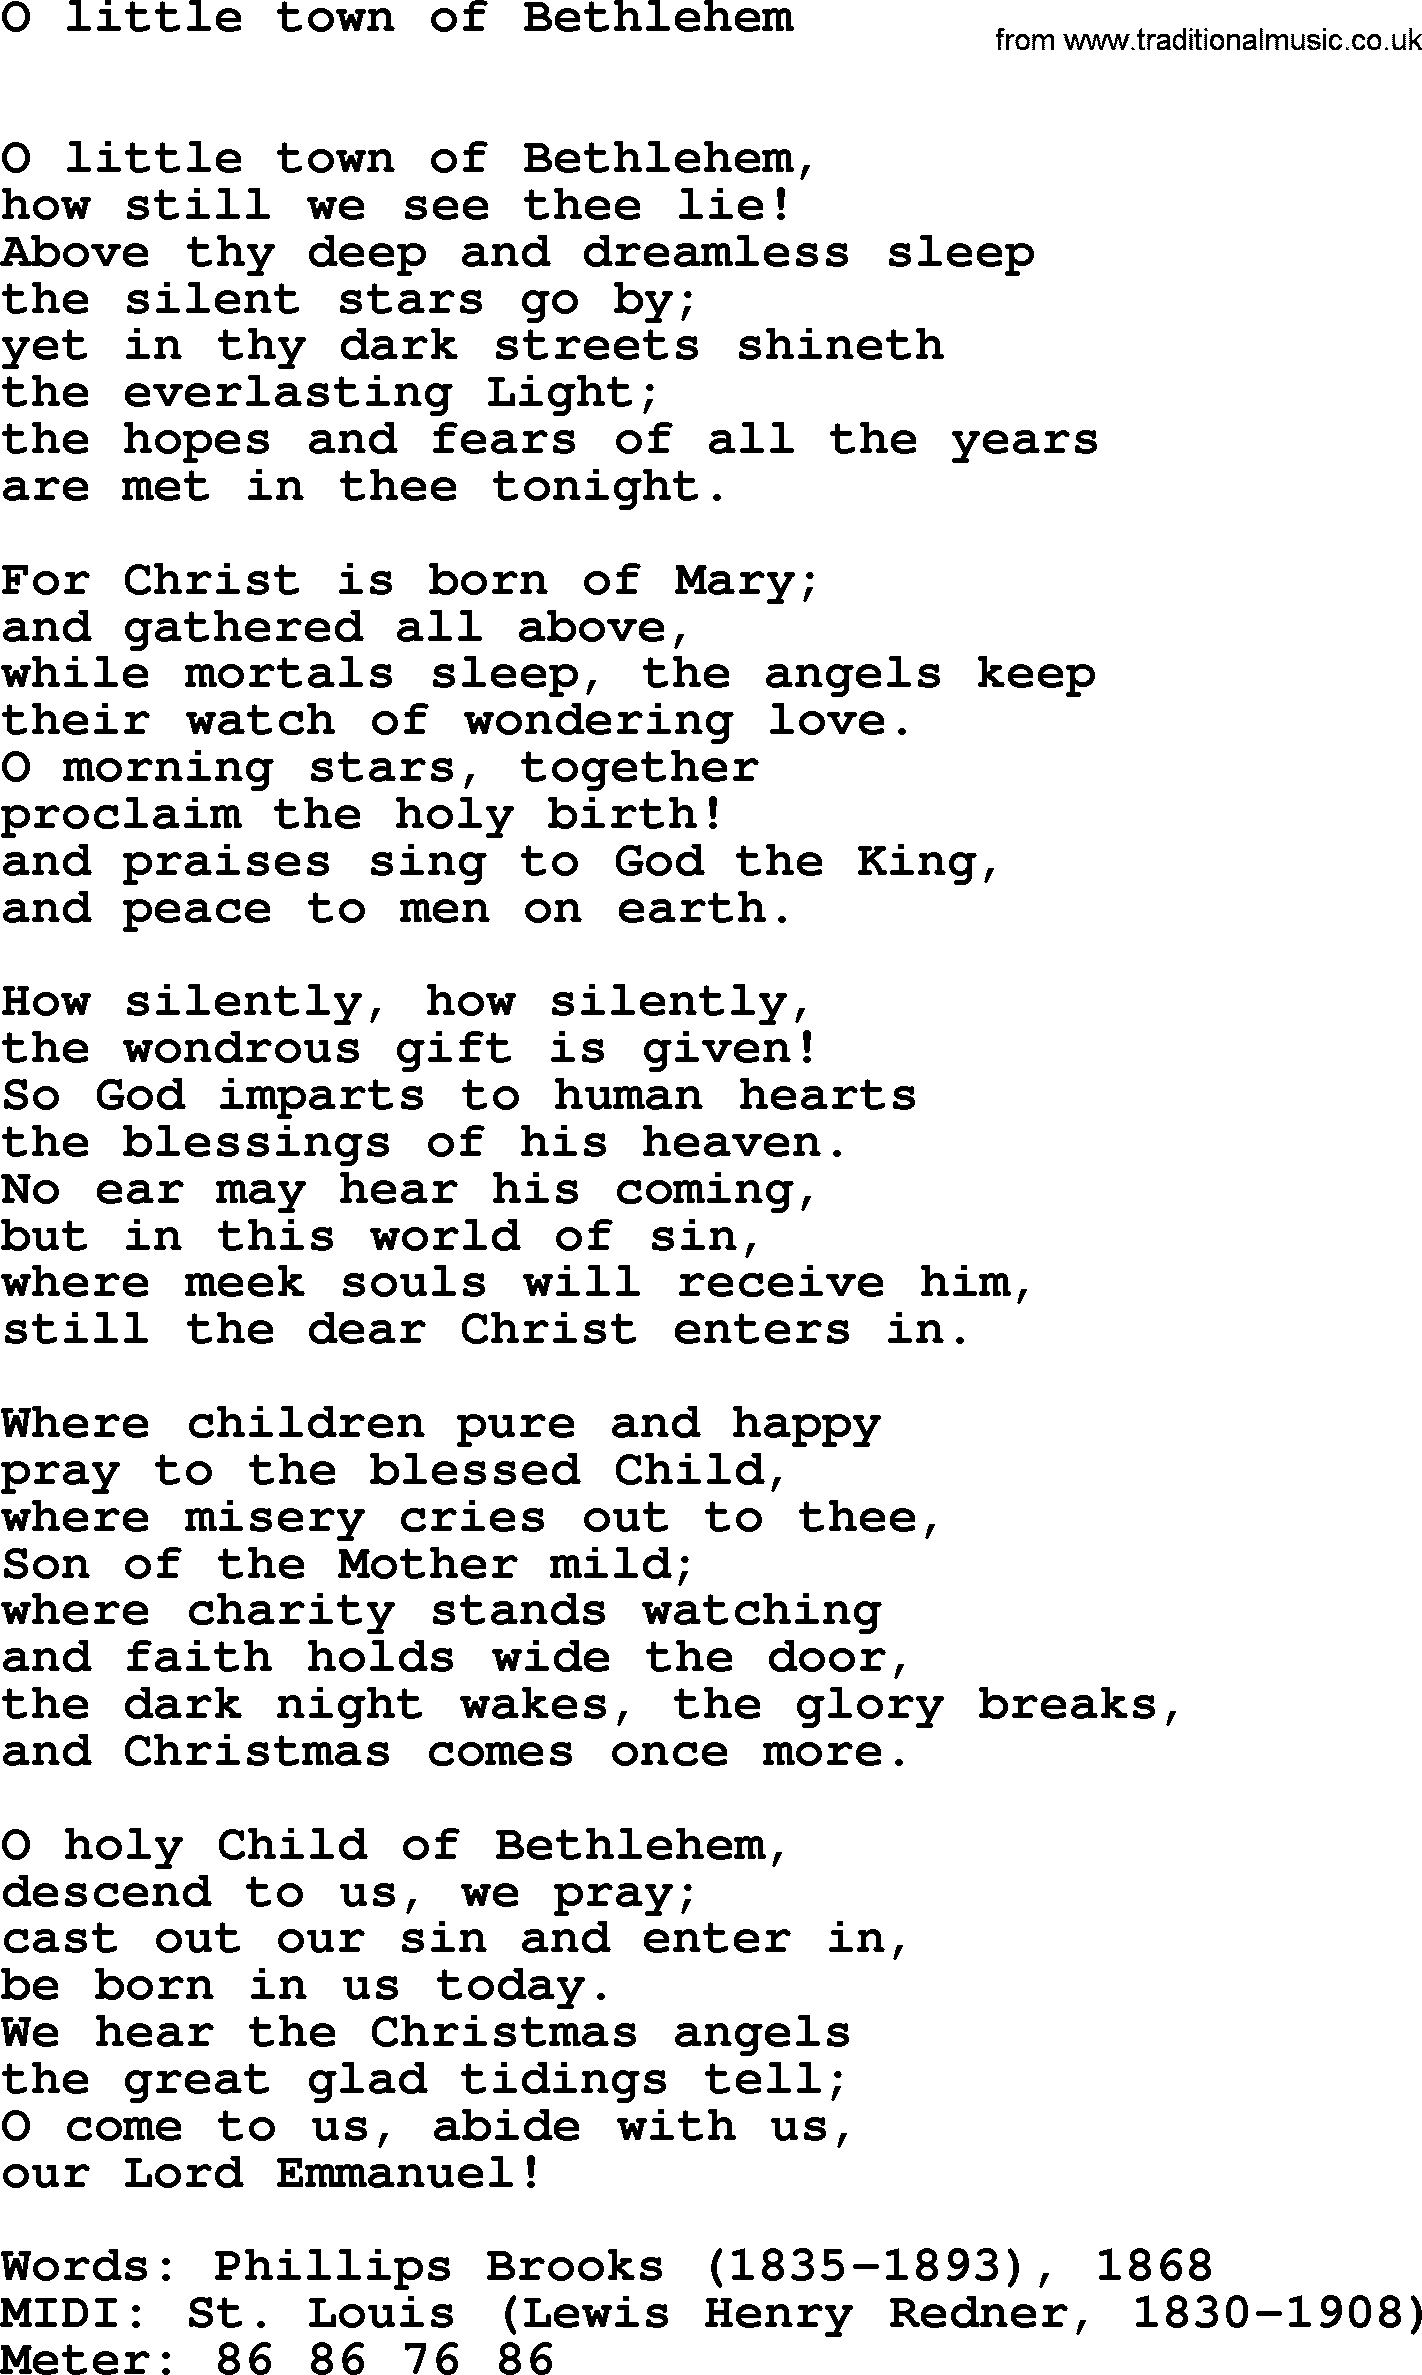 Book of Common Praise Hymn: O Little Town Of Bethlehem.txt lyrics with midi music